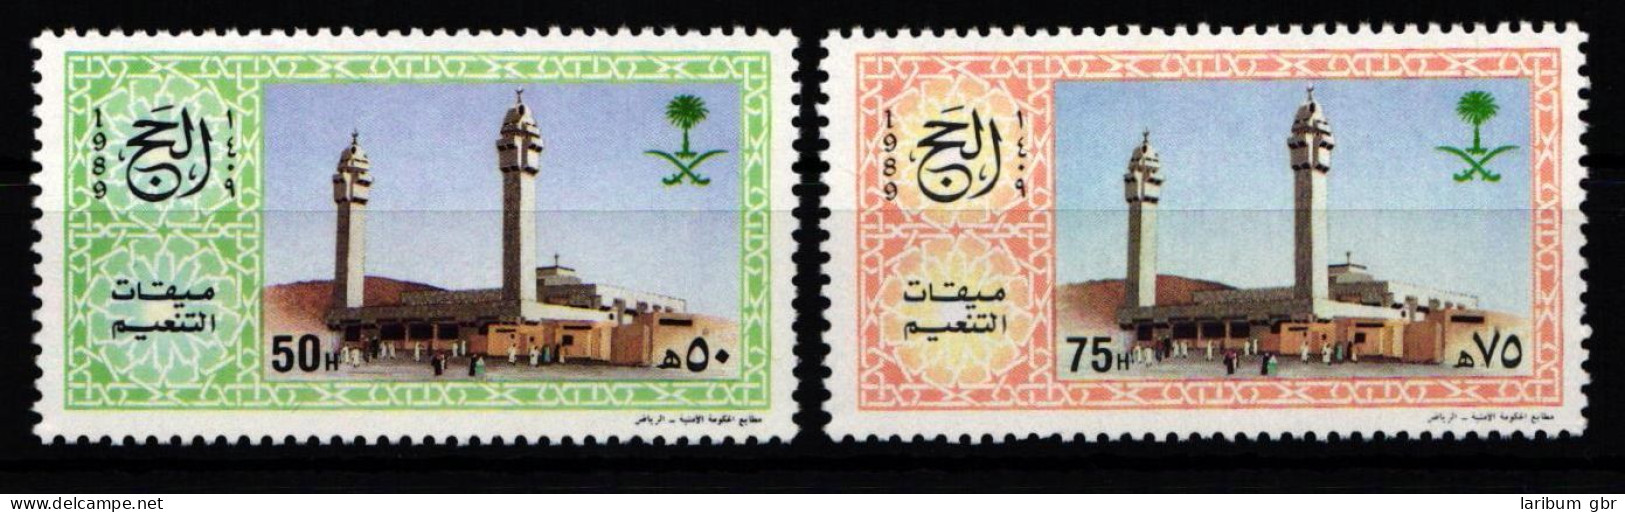 Saudi Arabien 950-951 Postfrisch #JZ716 - Saudi Arabia